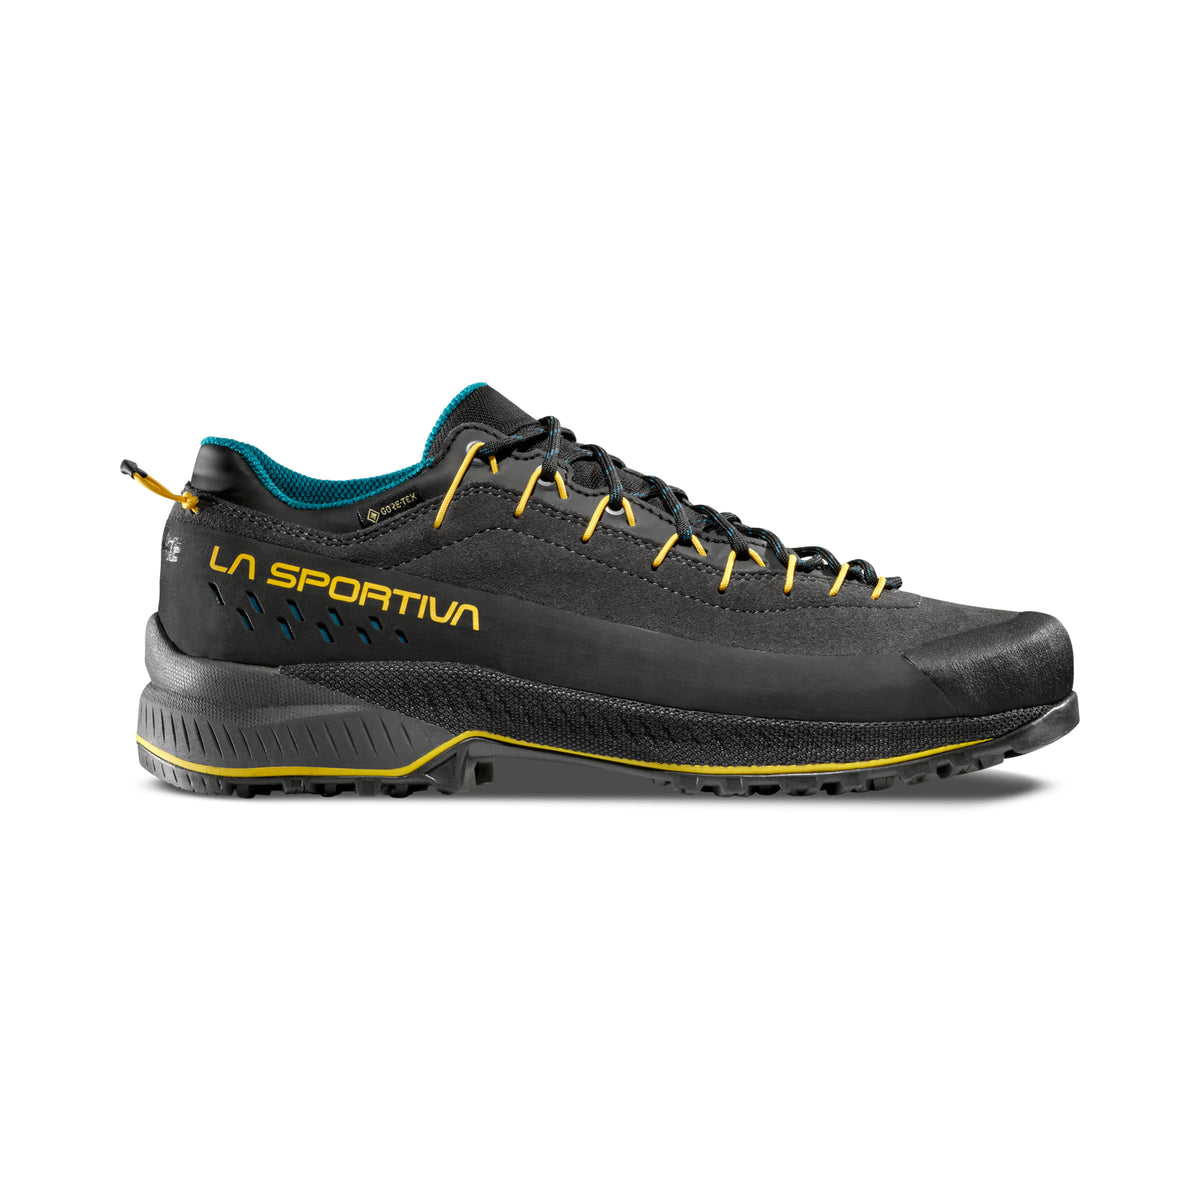 La Sportiva TX4 Evo GTX - Mens approach shoes in carbon bamboo colour